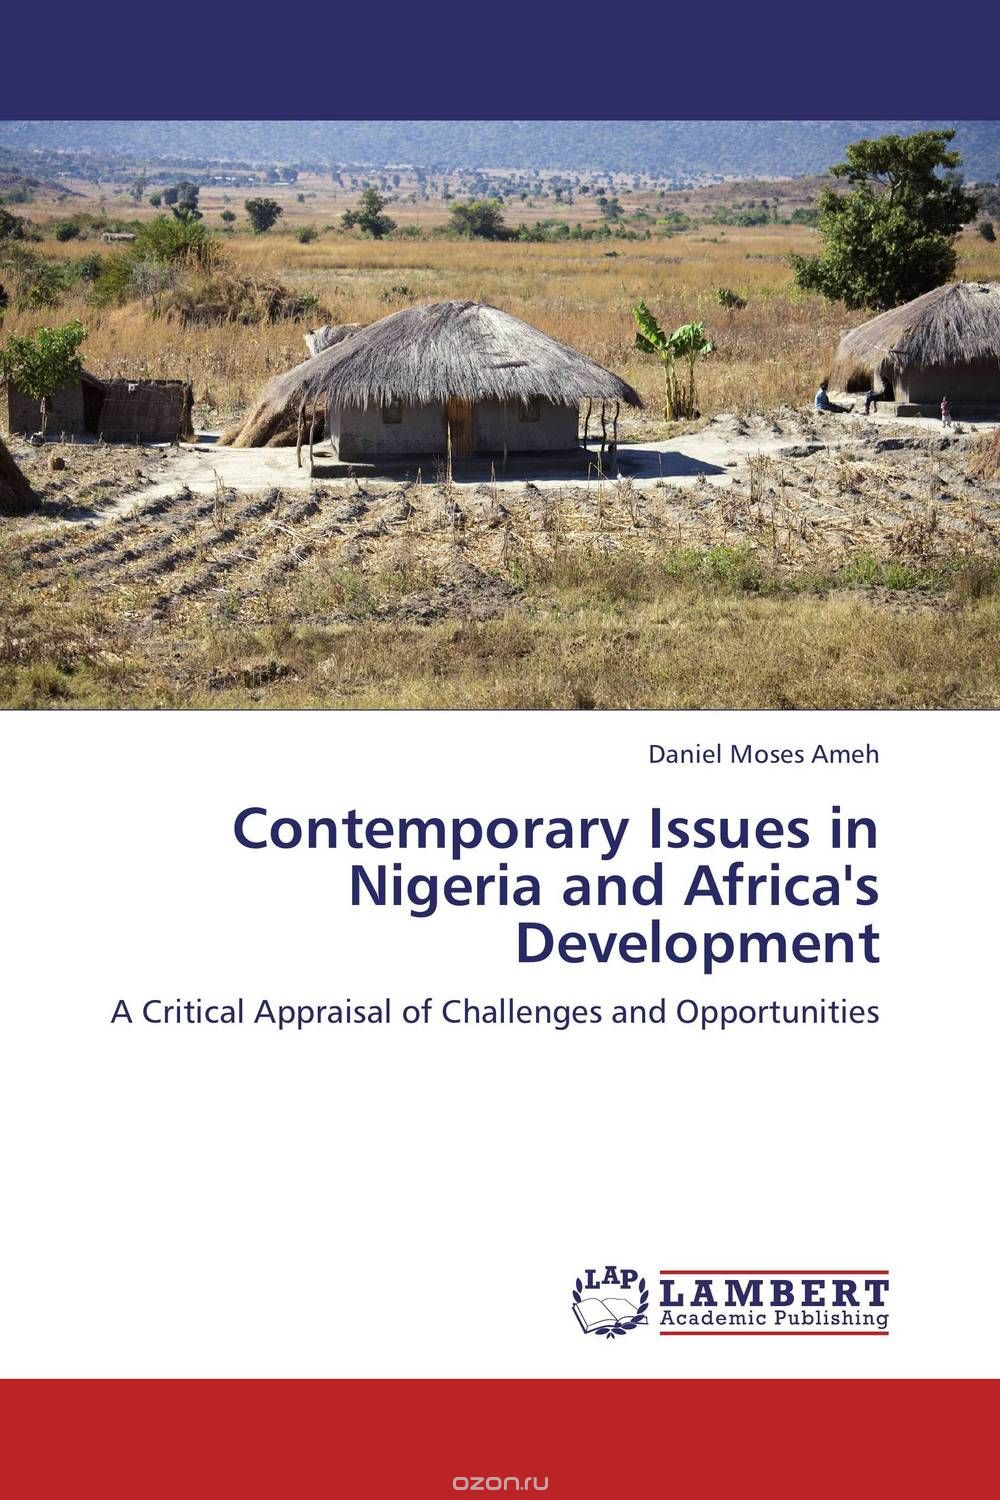 Скачать книгу "Contemporary Issues in Nigeria and Africa's Development"